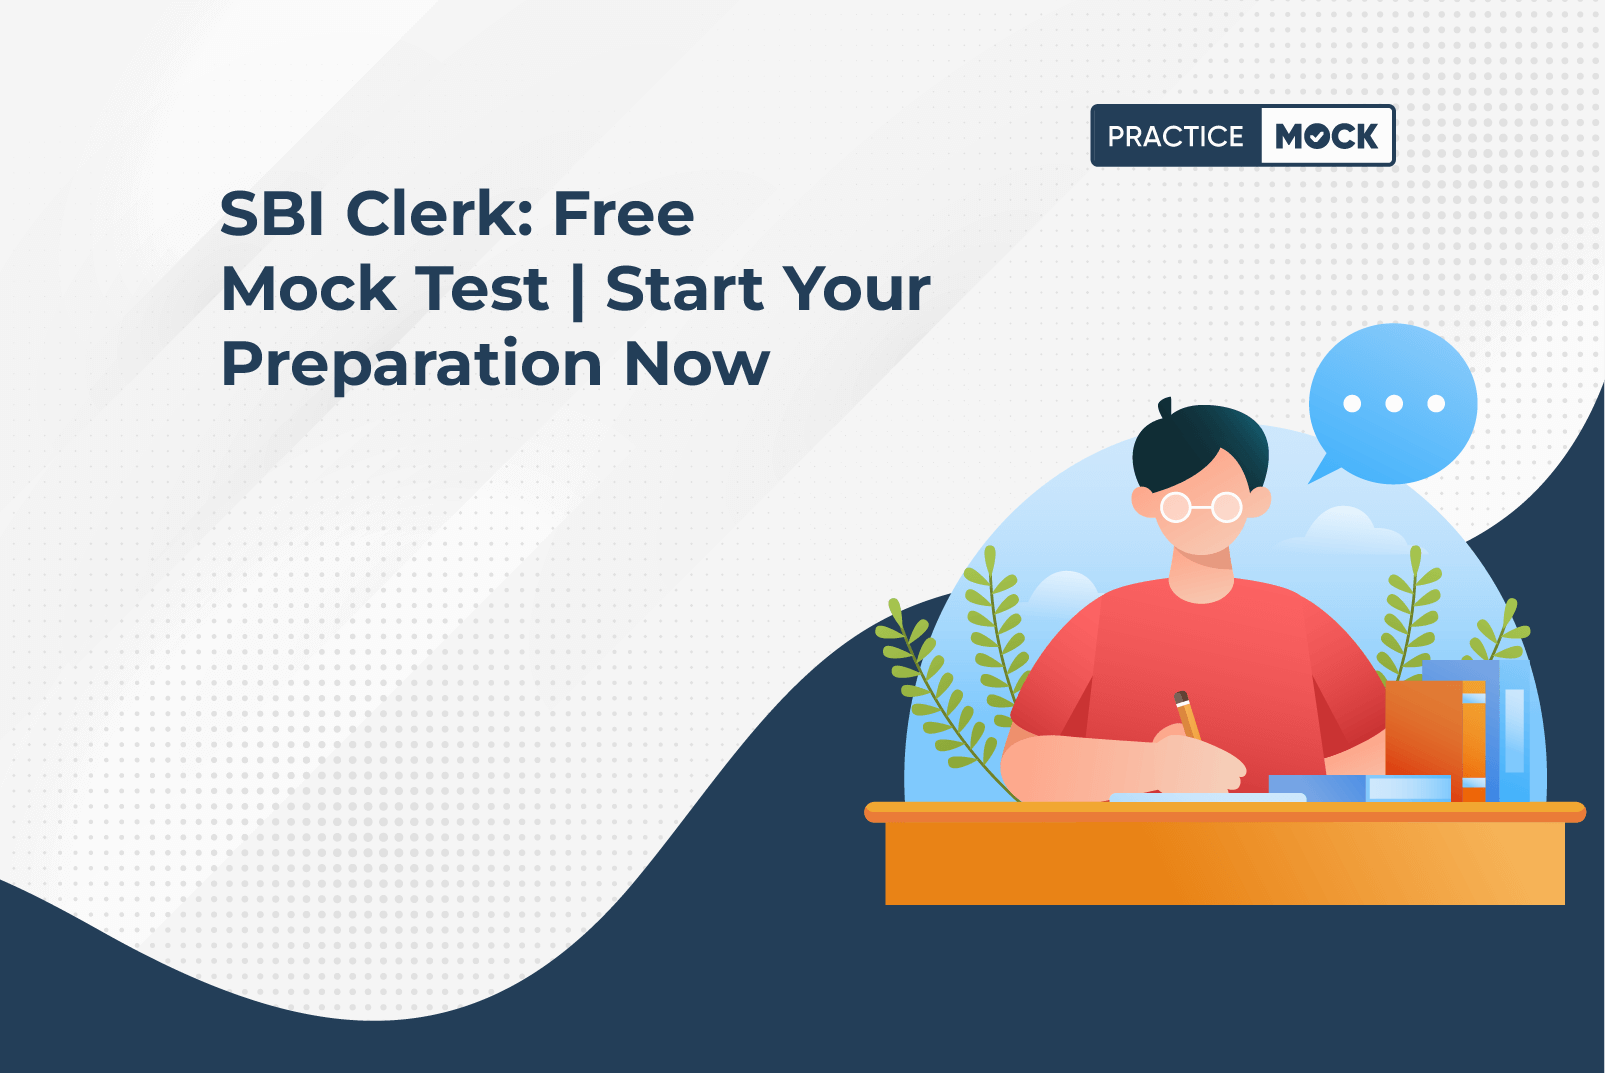 SBI Clerk Free Mock Test Start Your Preparation Now (1)